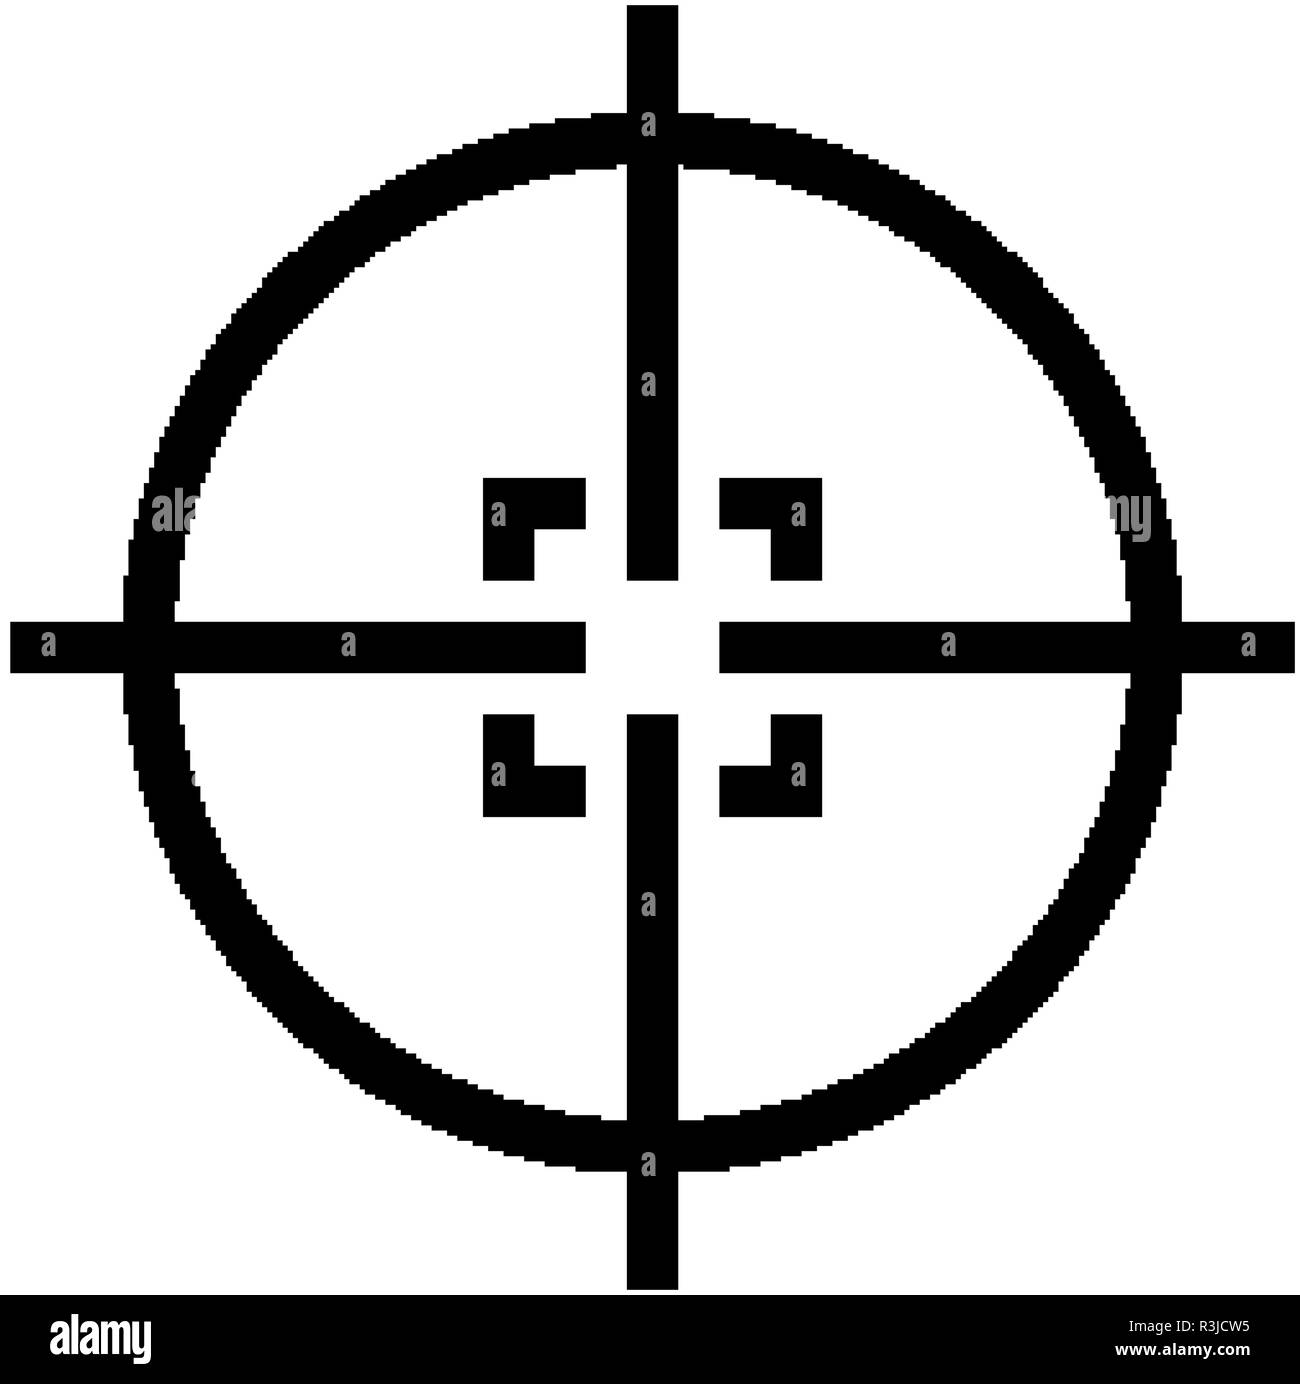 Sniper crosshairs icon. Target aim cross. Rifle scope rear sight Stock Vector